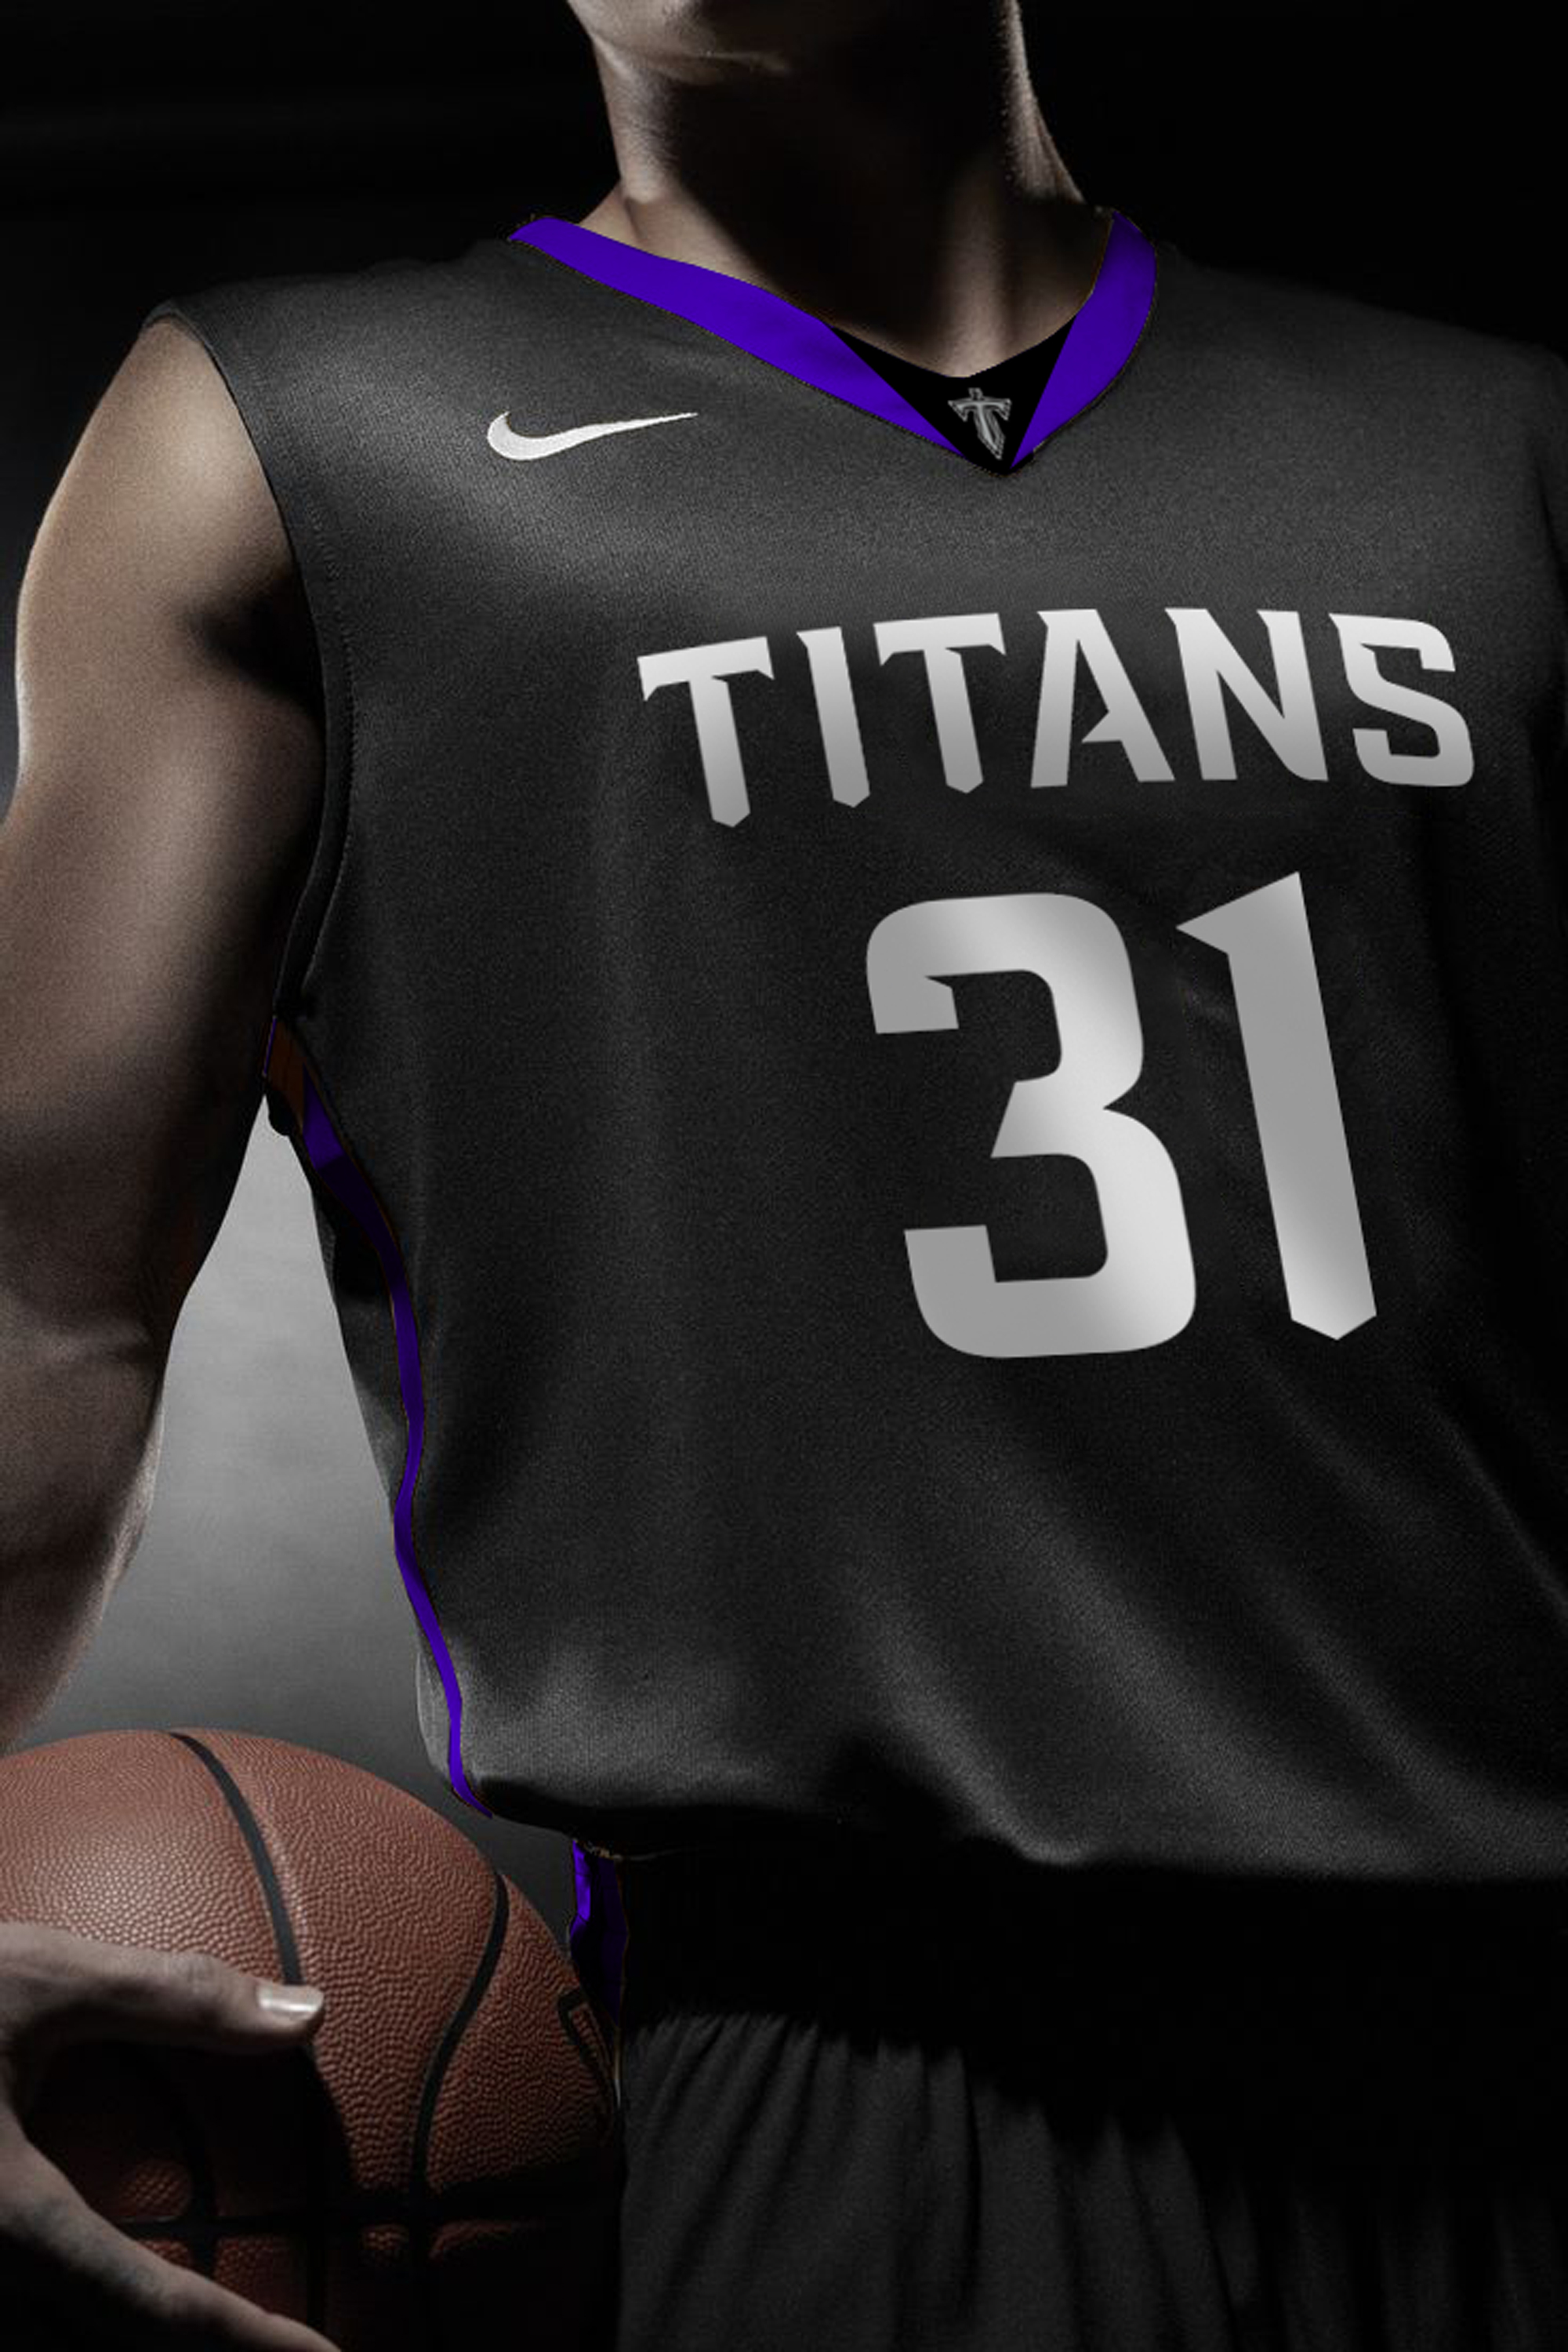 titan jersey design